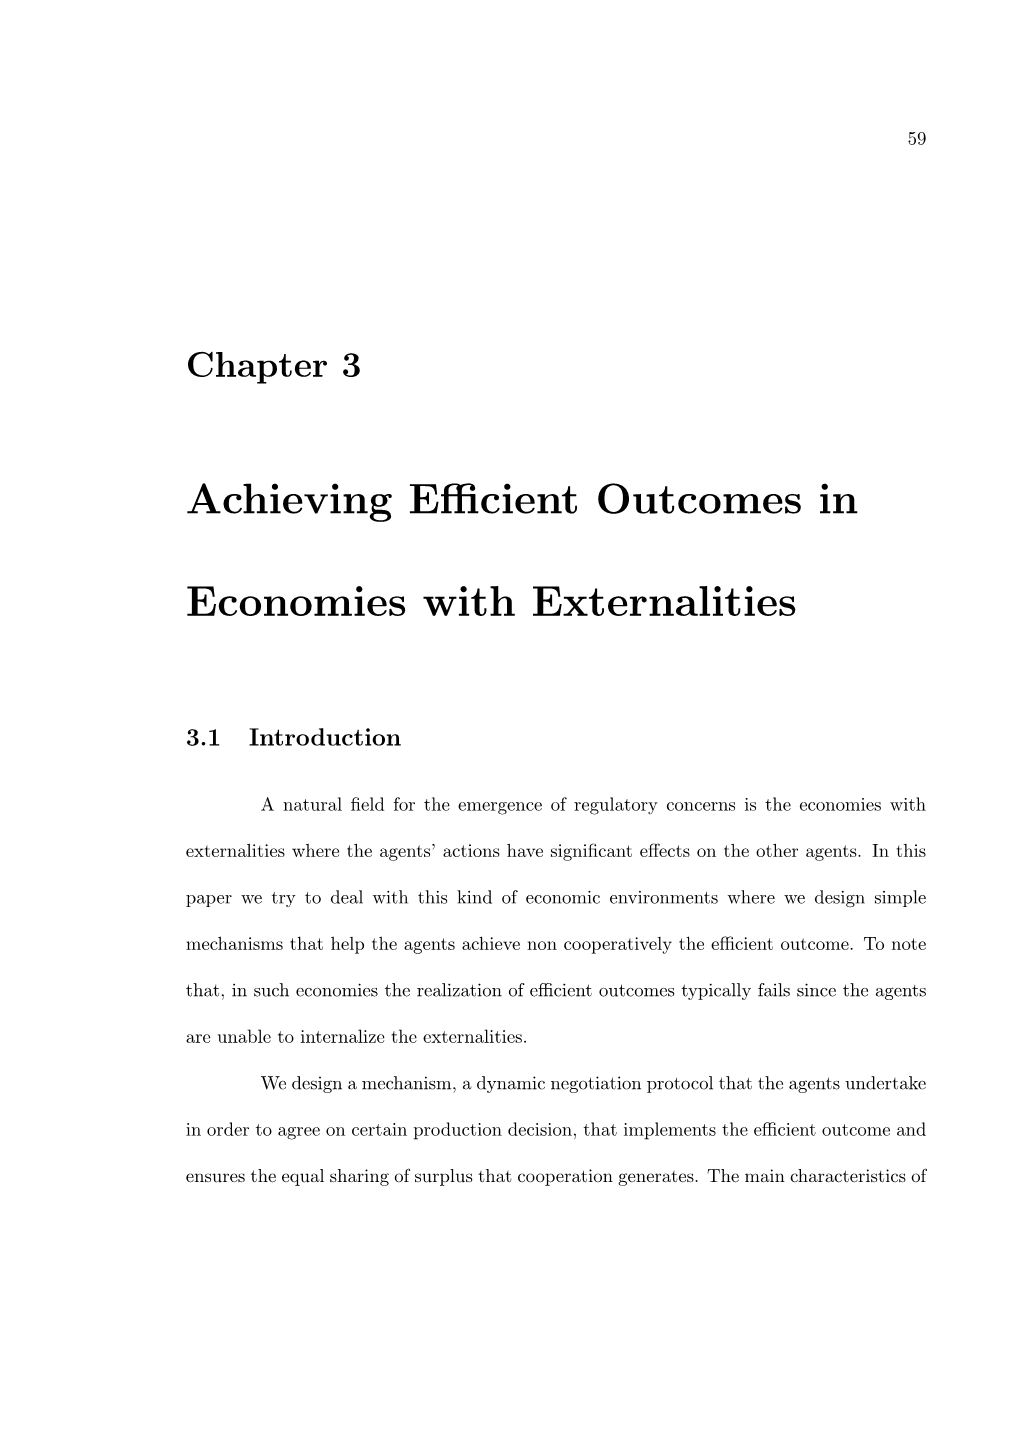 Economies with Externalities